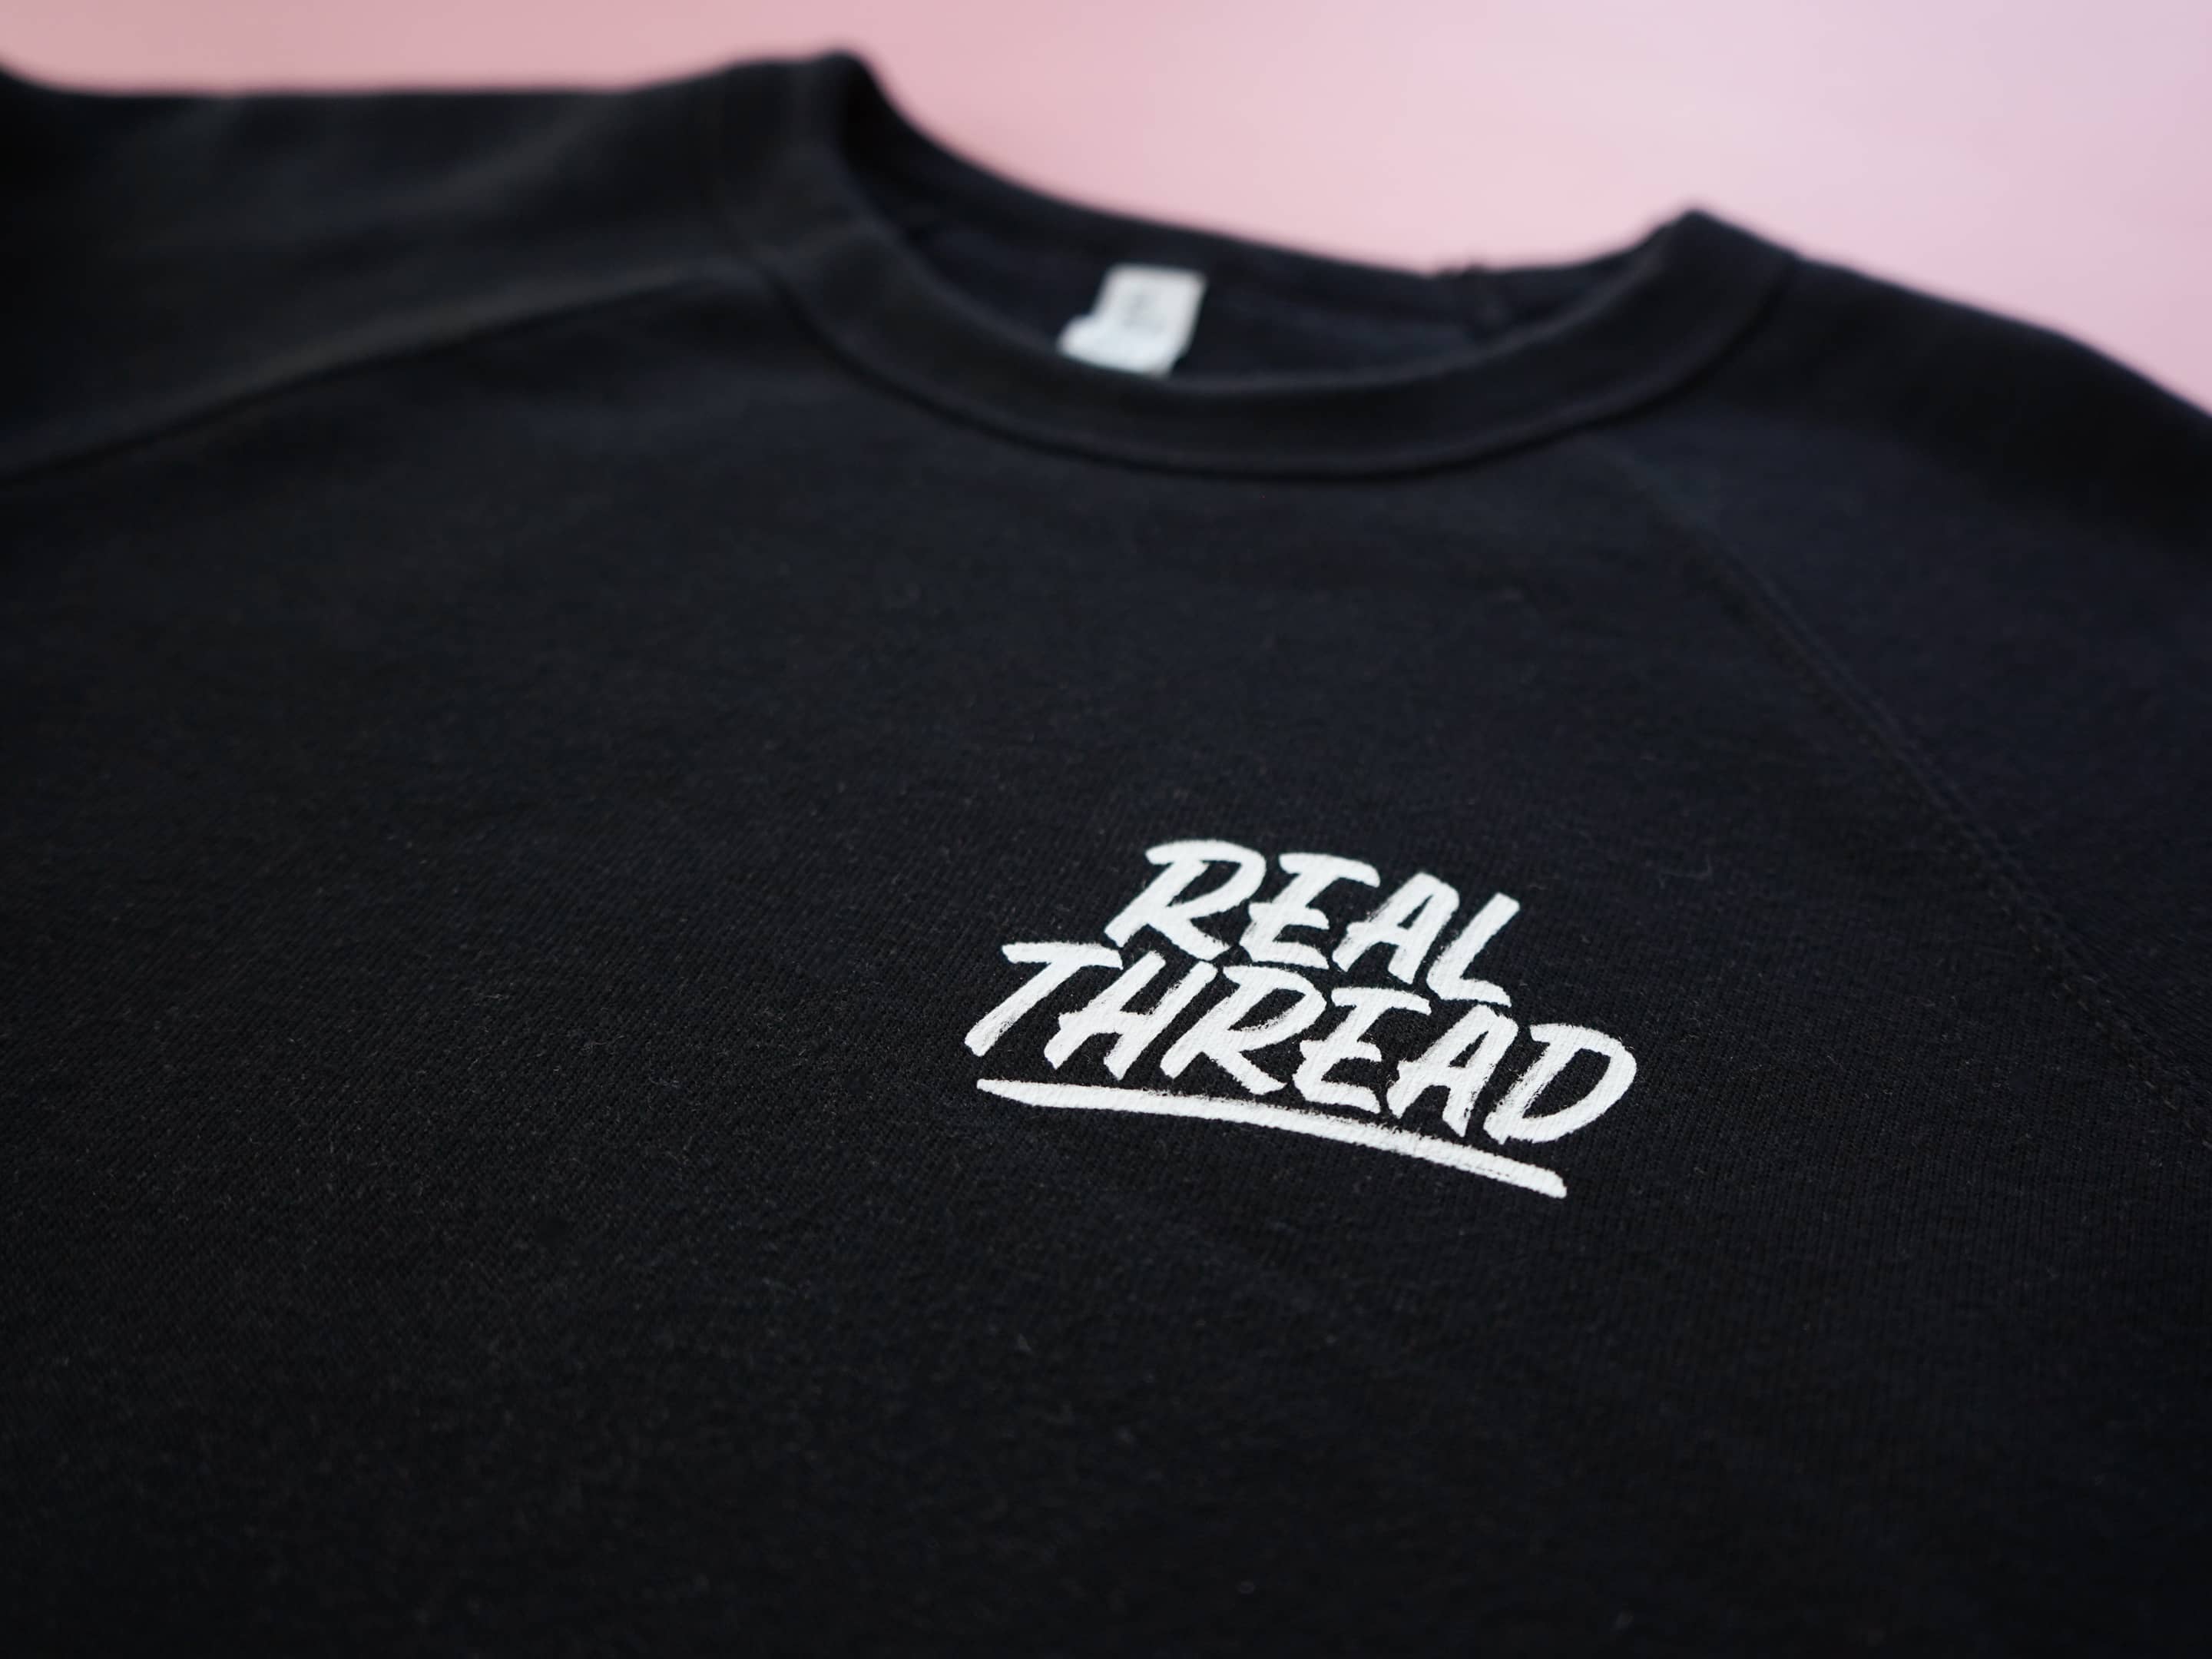 Real Thread pullover design